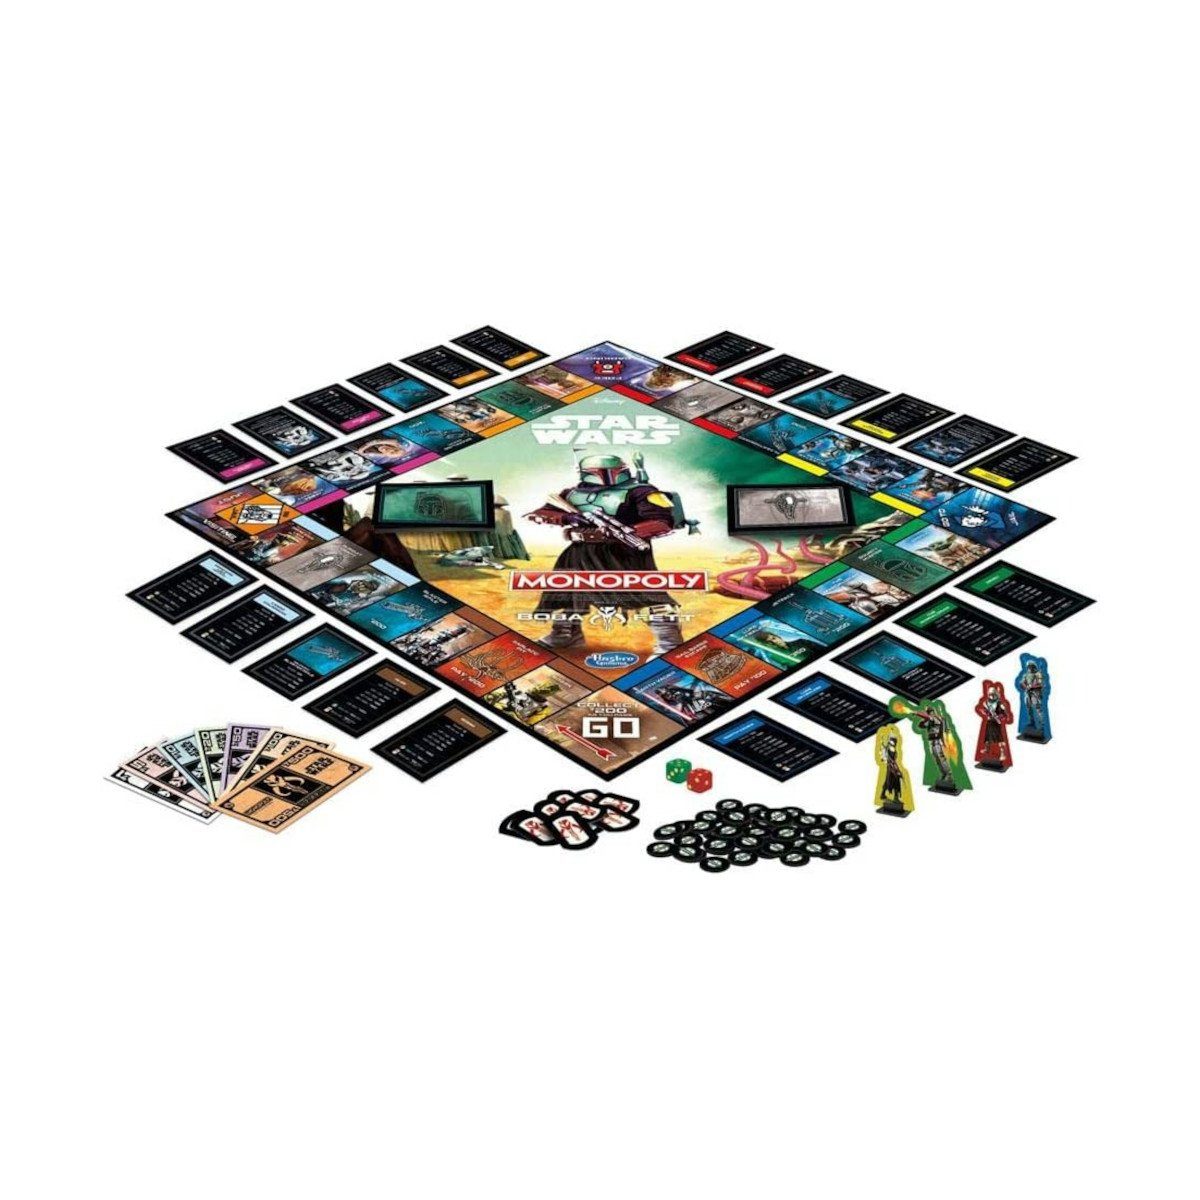 Spiel, - Wars: Star Monopoly Boba Fett Brettspiel Hasbro (englisch)